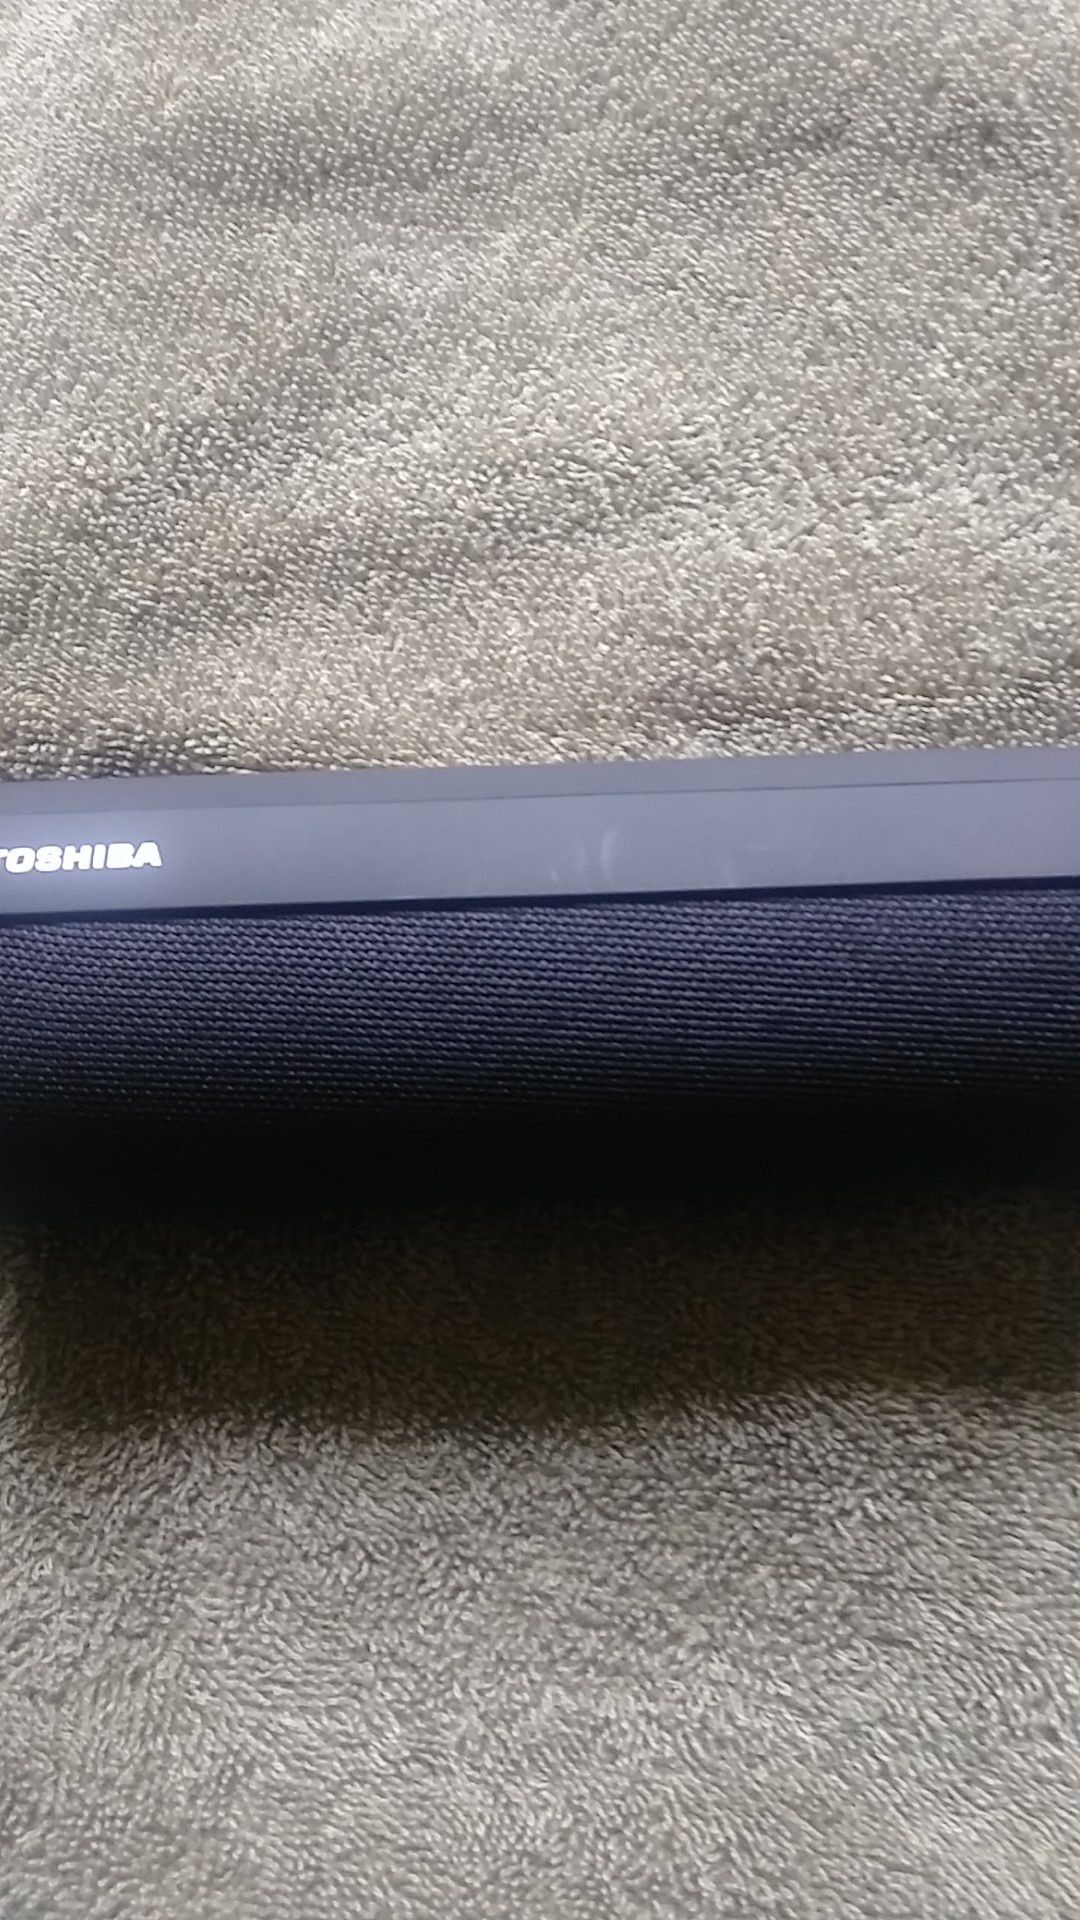 Brand new Toshiba Bluetooth speaker